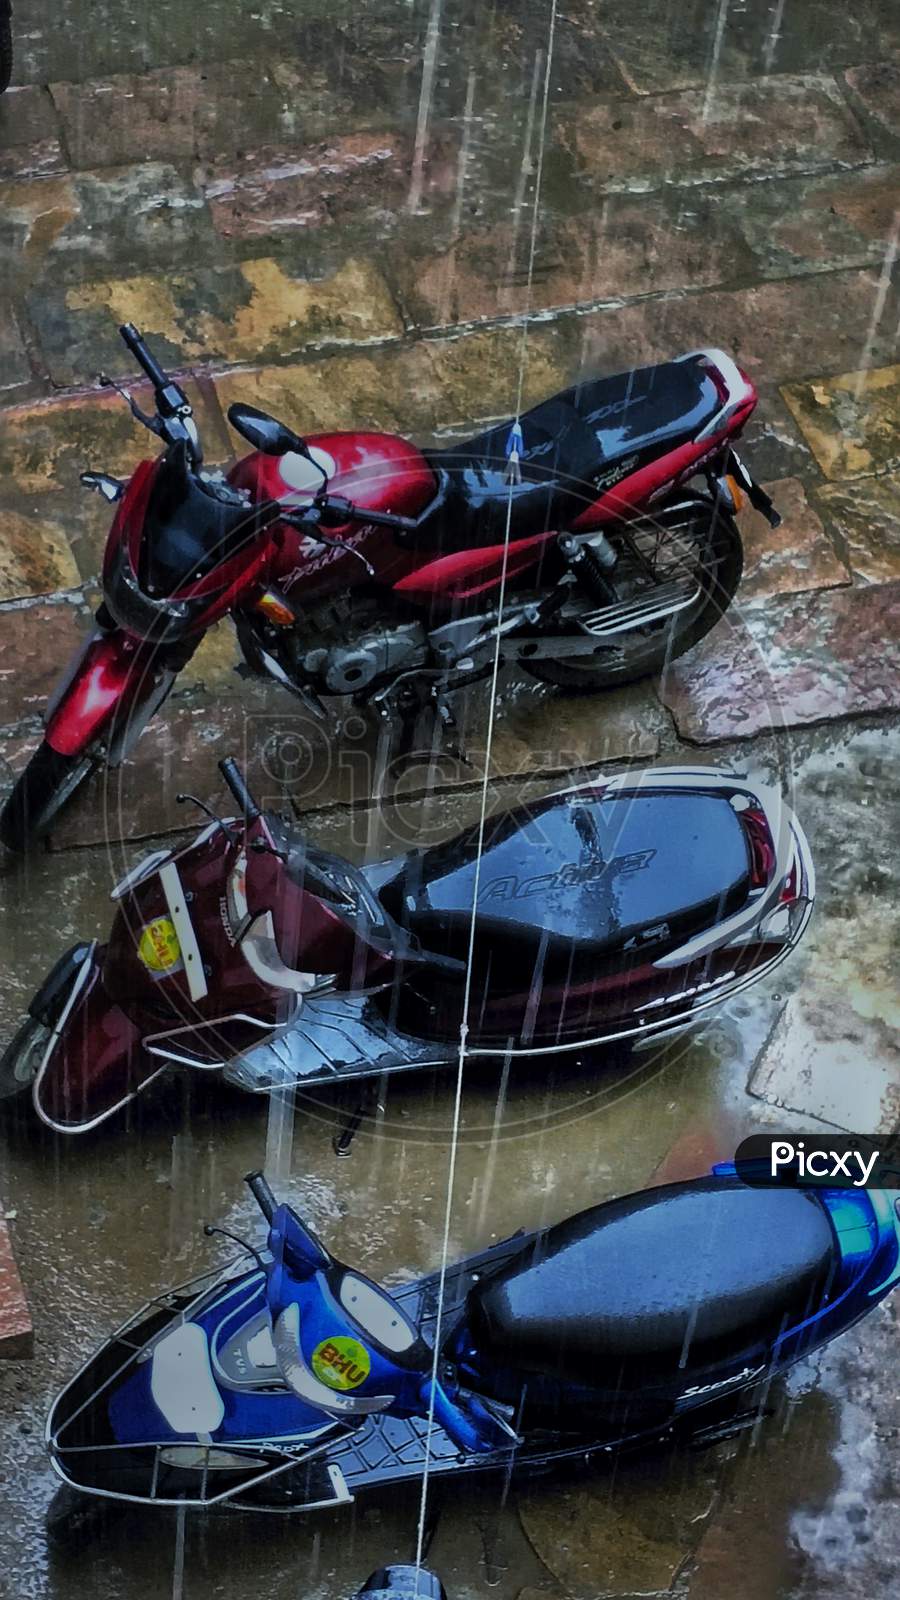 Stand bike during raining weather